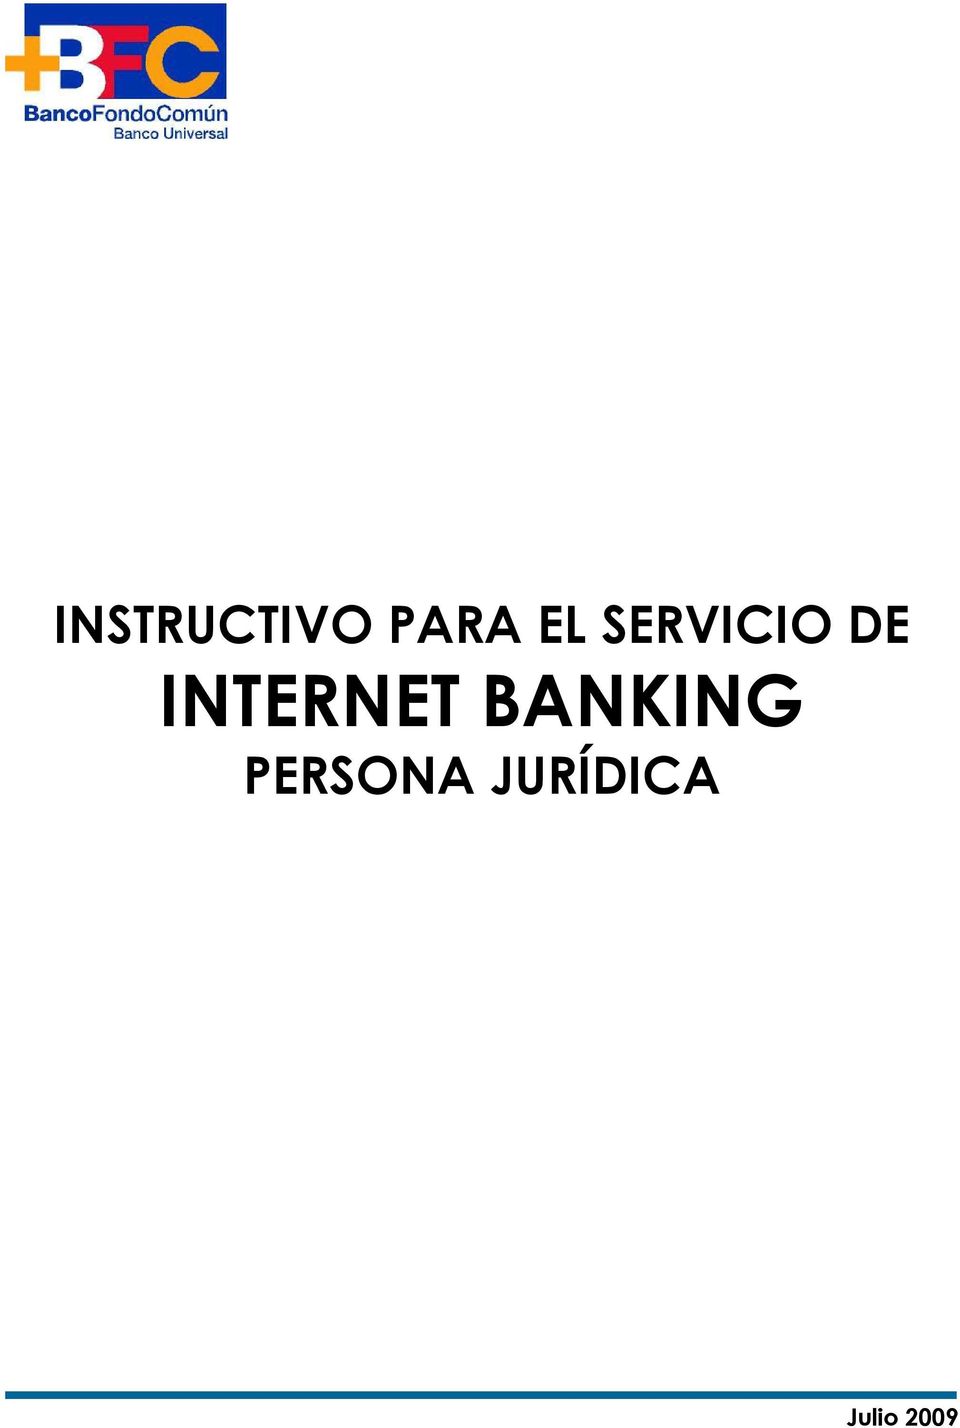 INTERNET BANKING